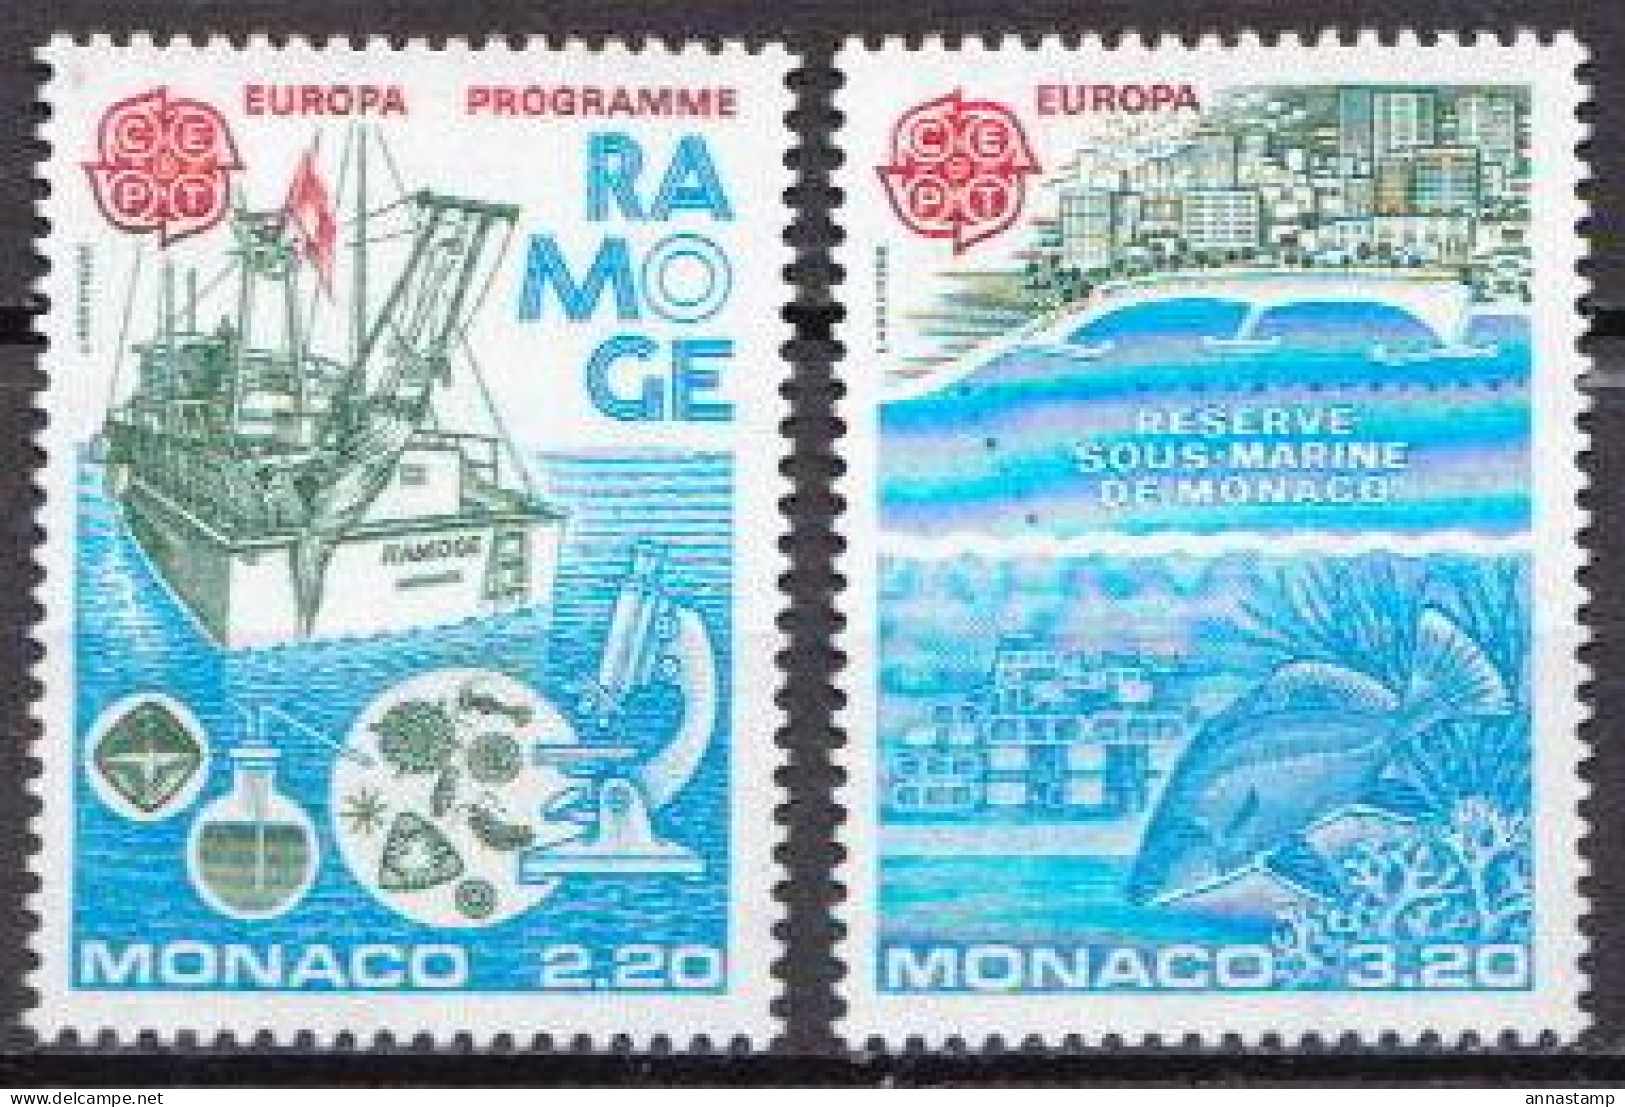 Monaco MNH Set - 1986